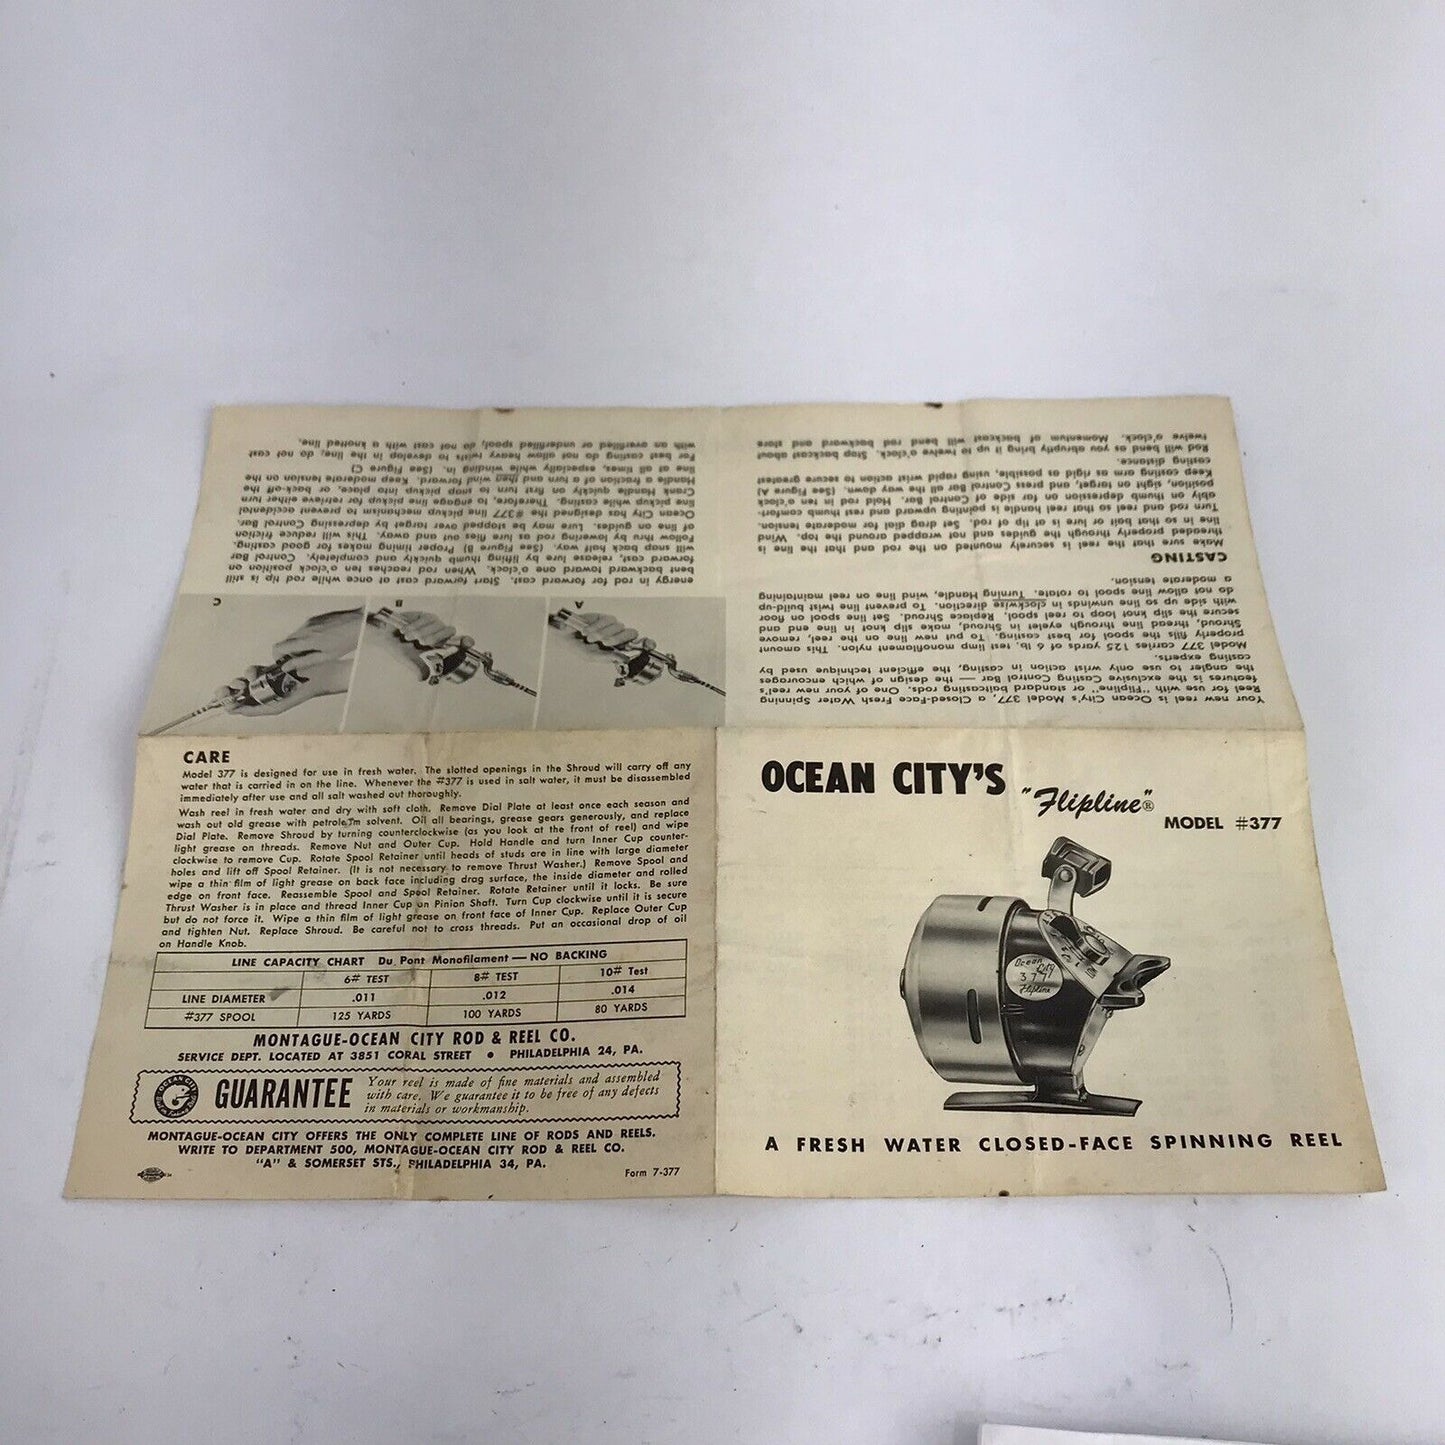 Vintage Ocean City’s Flipline 377 Fishing Reel Instructions Manual NO REEL